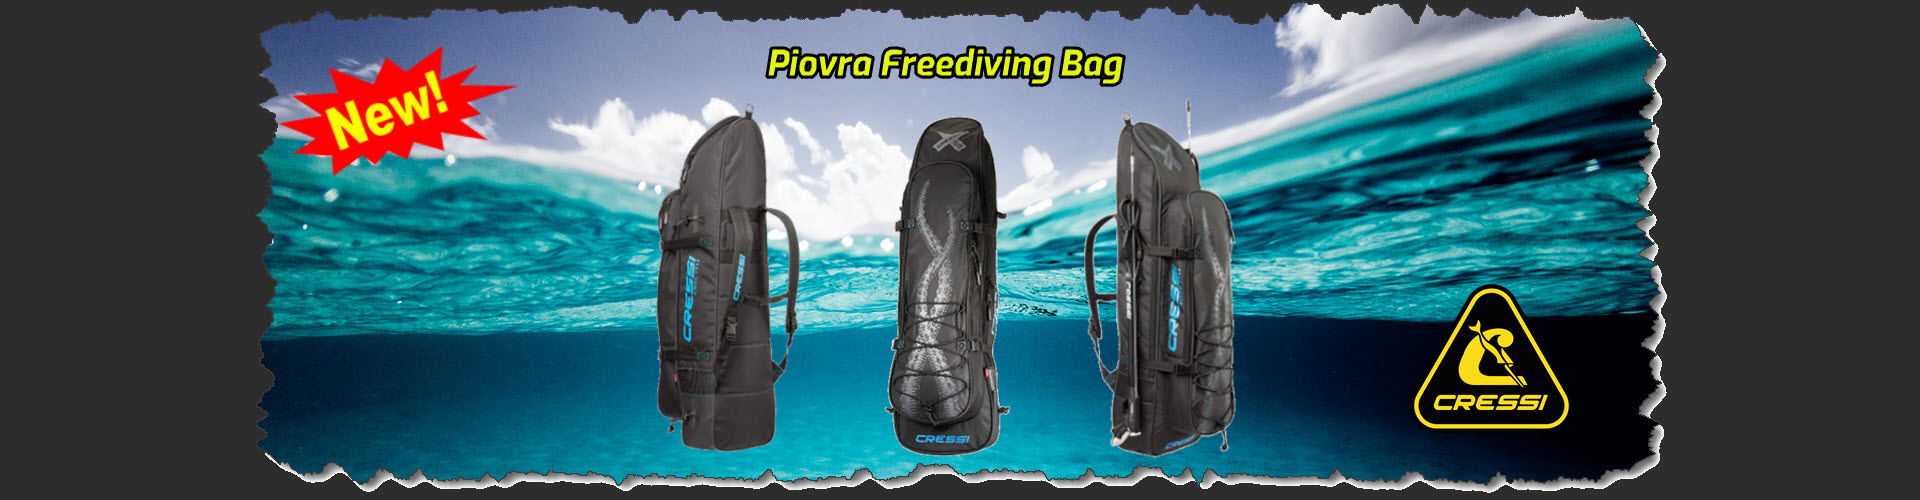 Piovra Freediving Bag